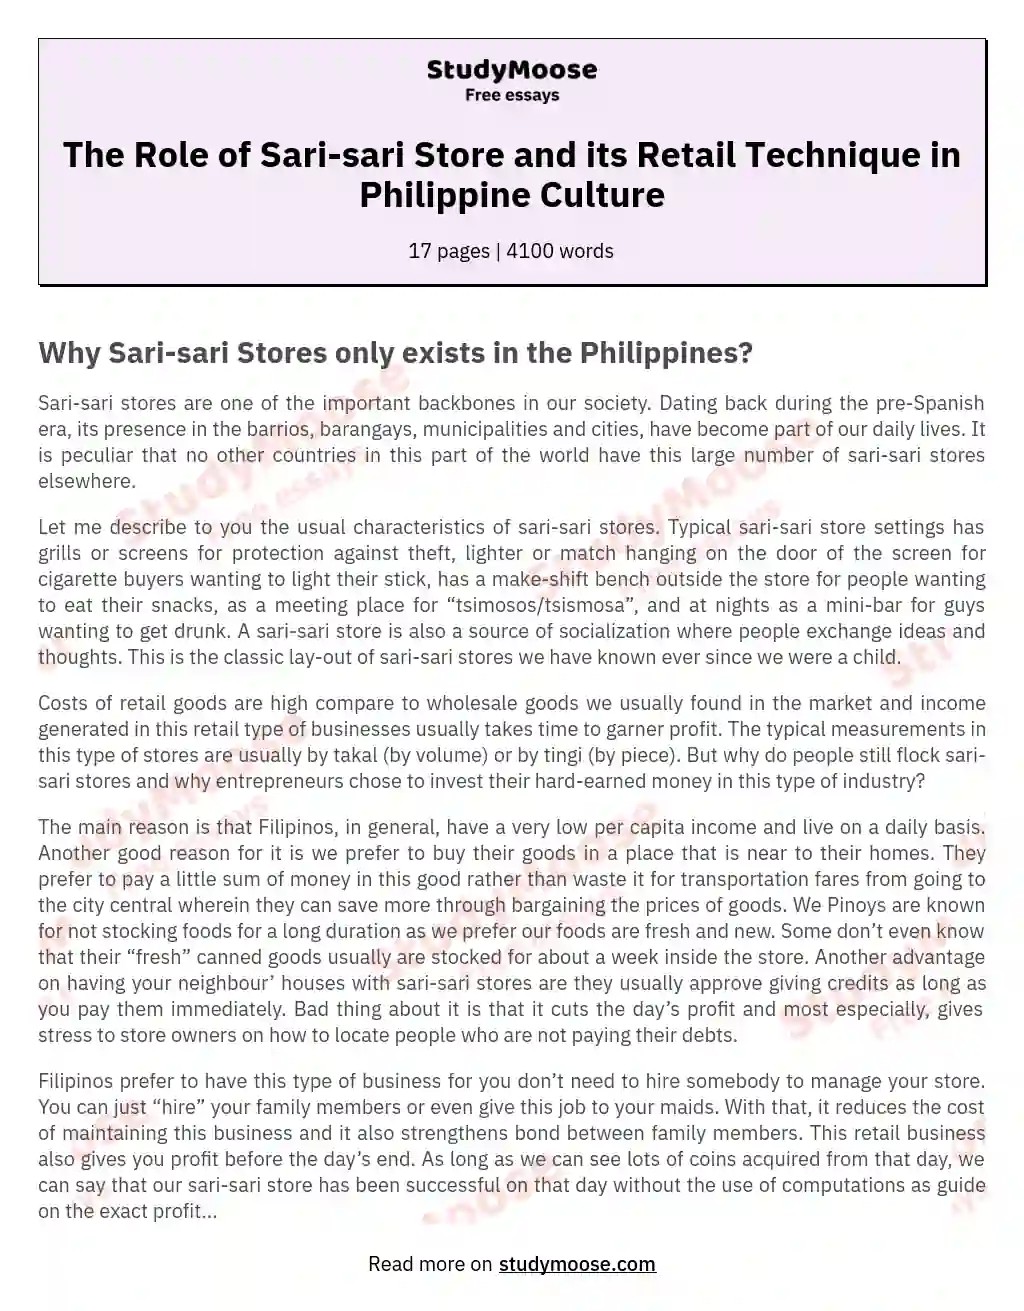 The Role of Sari-sari Store and its Retail Technique in Philippine Culture essay